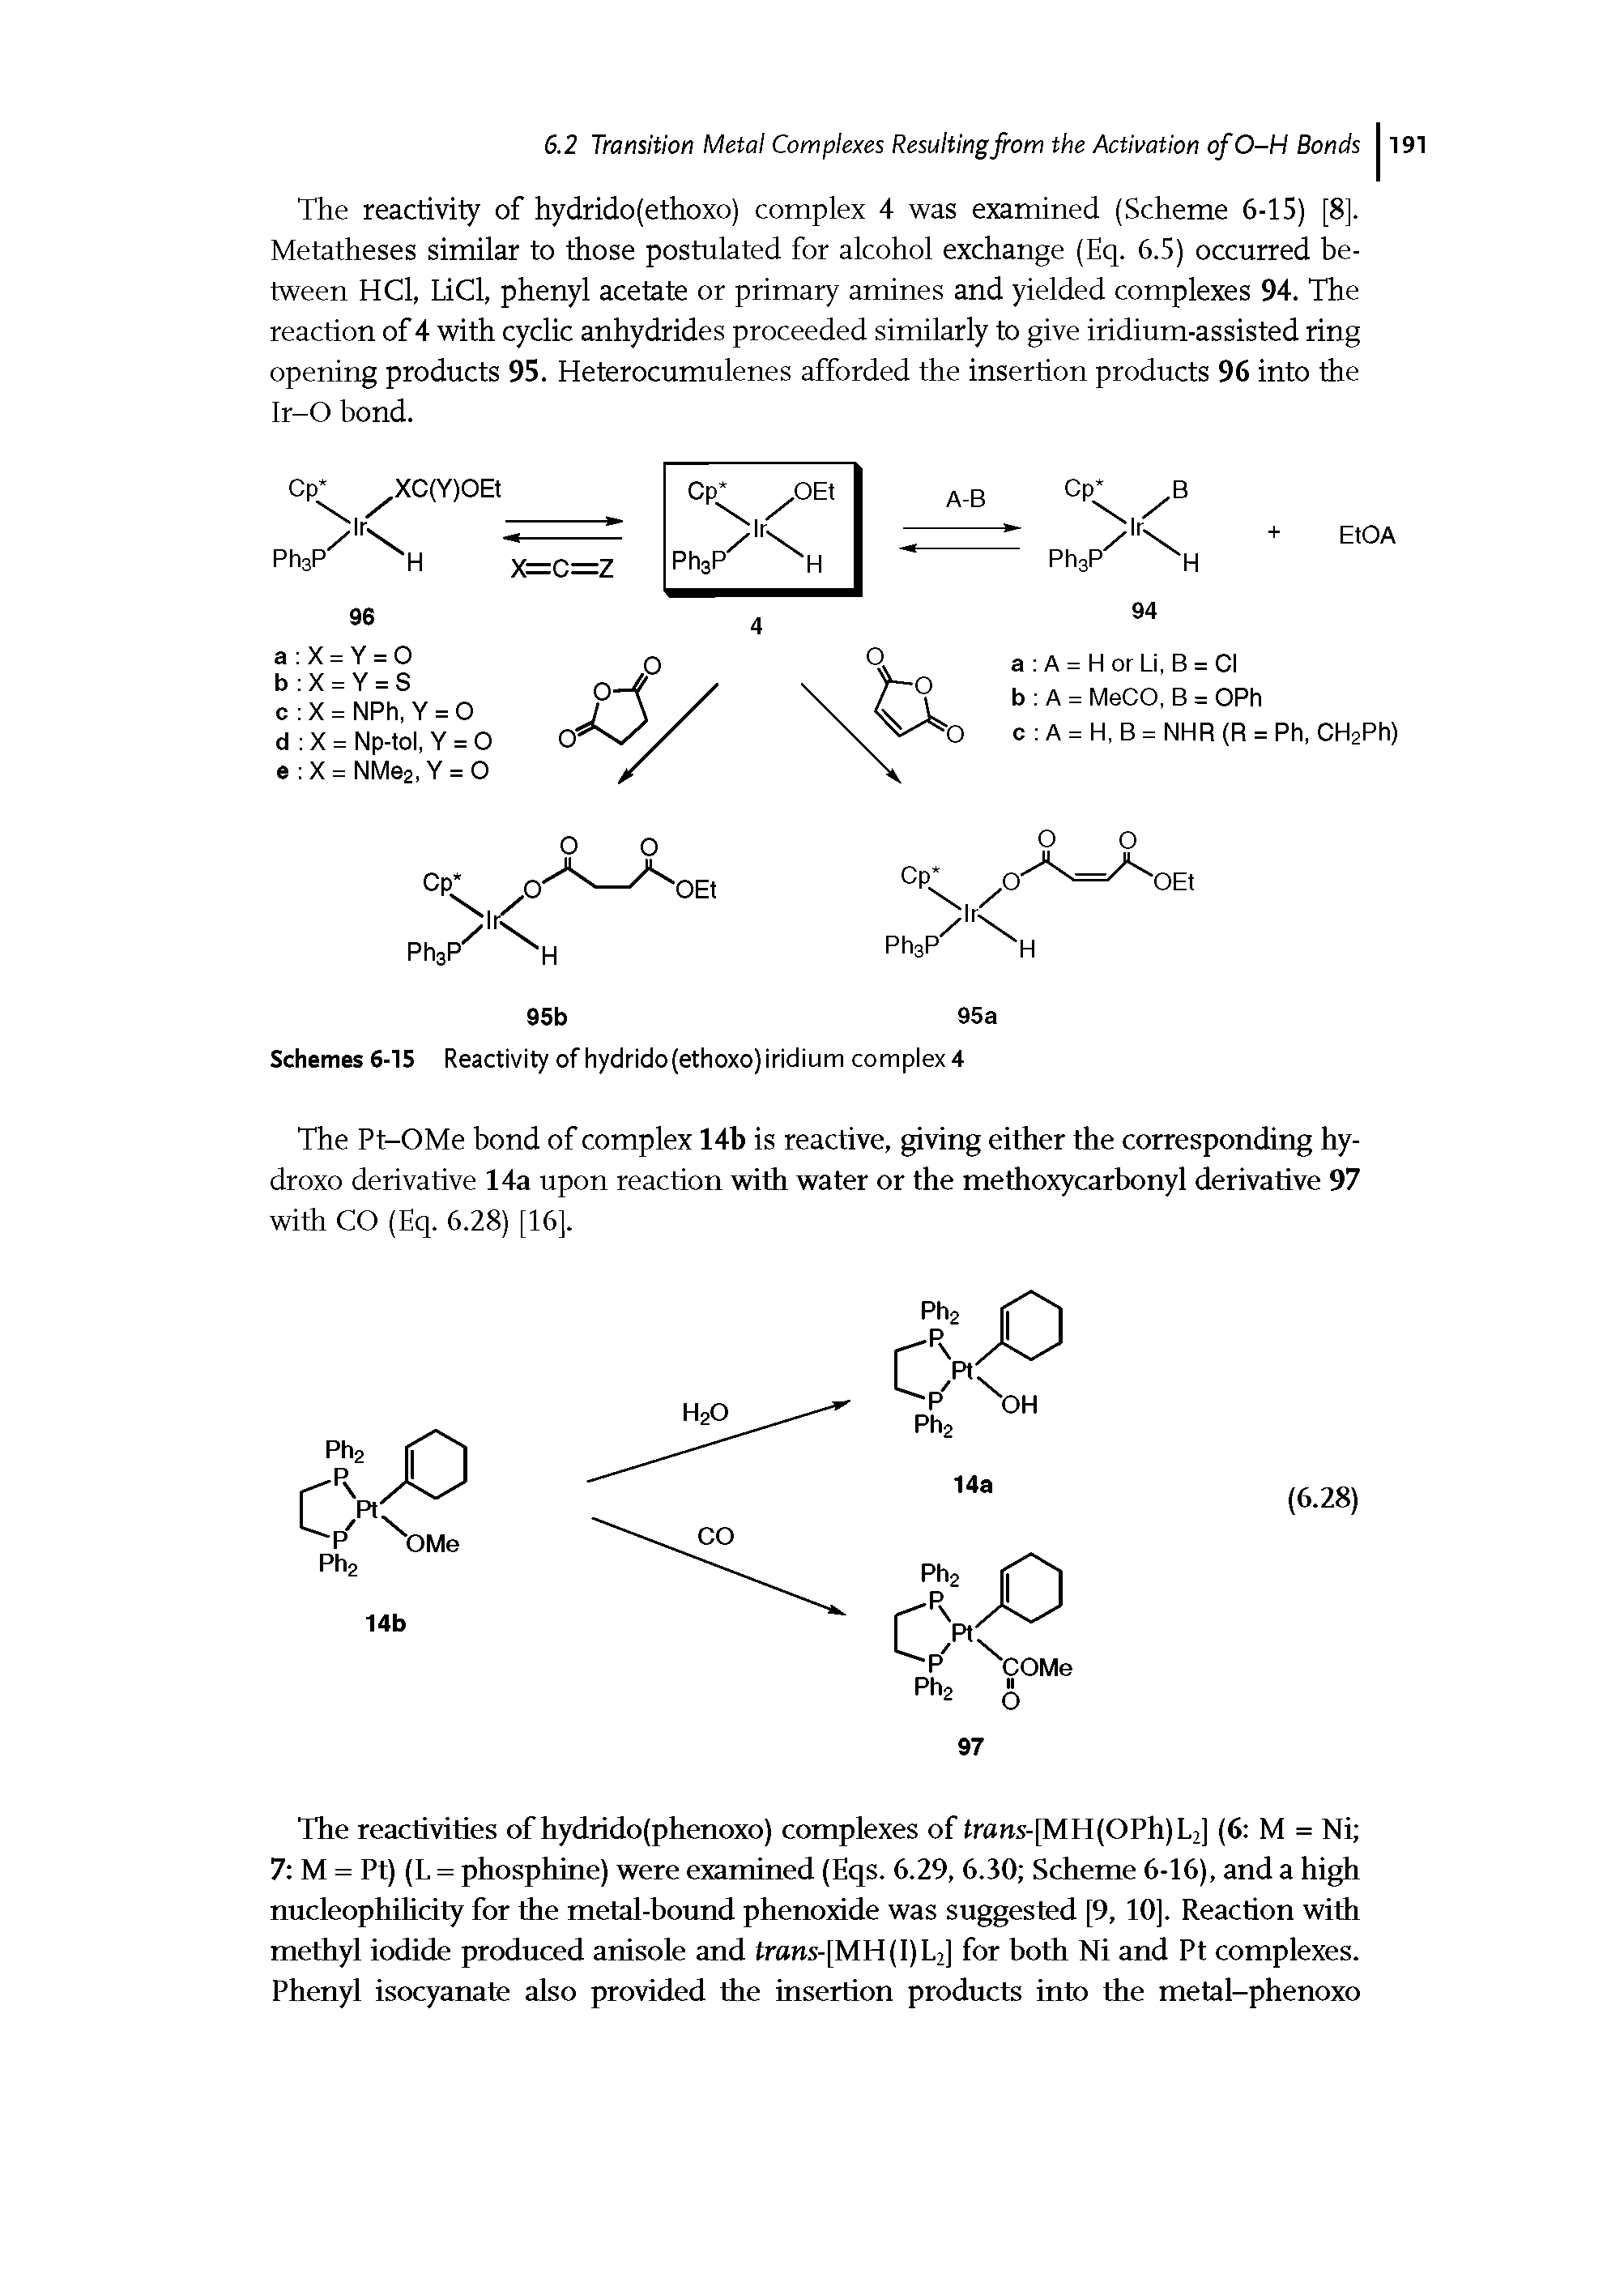 Schemes 6-15 Reactivity of hydrido(ethoxo)iridium compiex4...